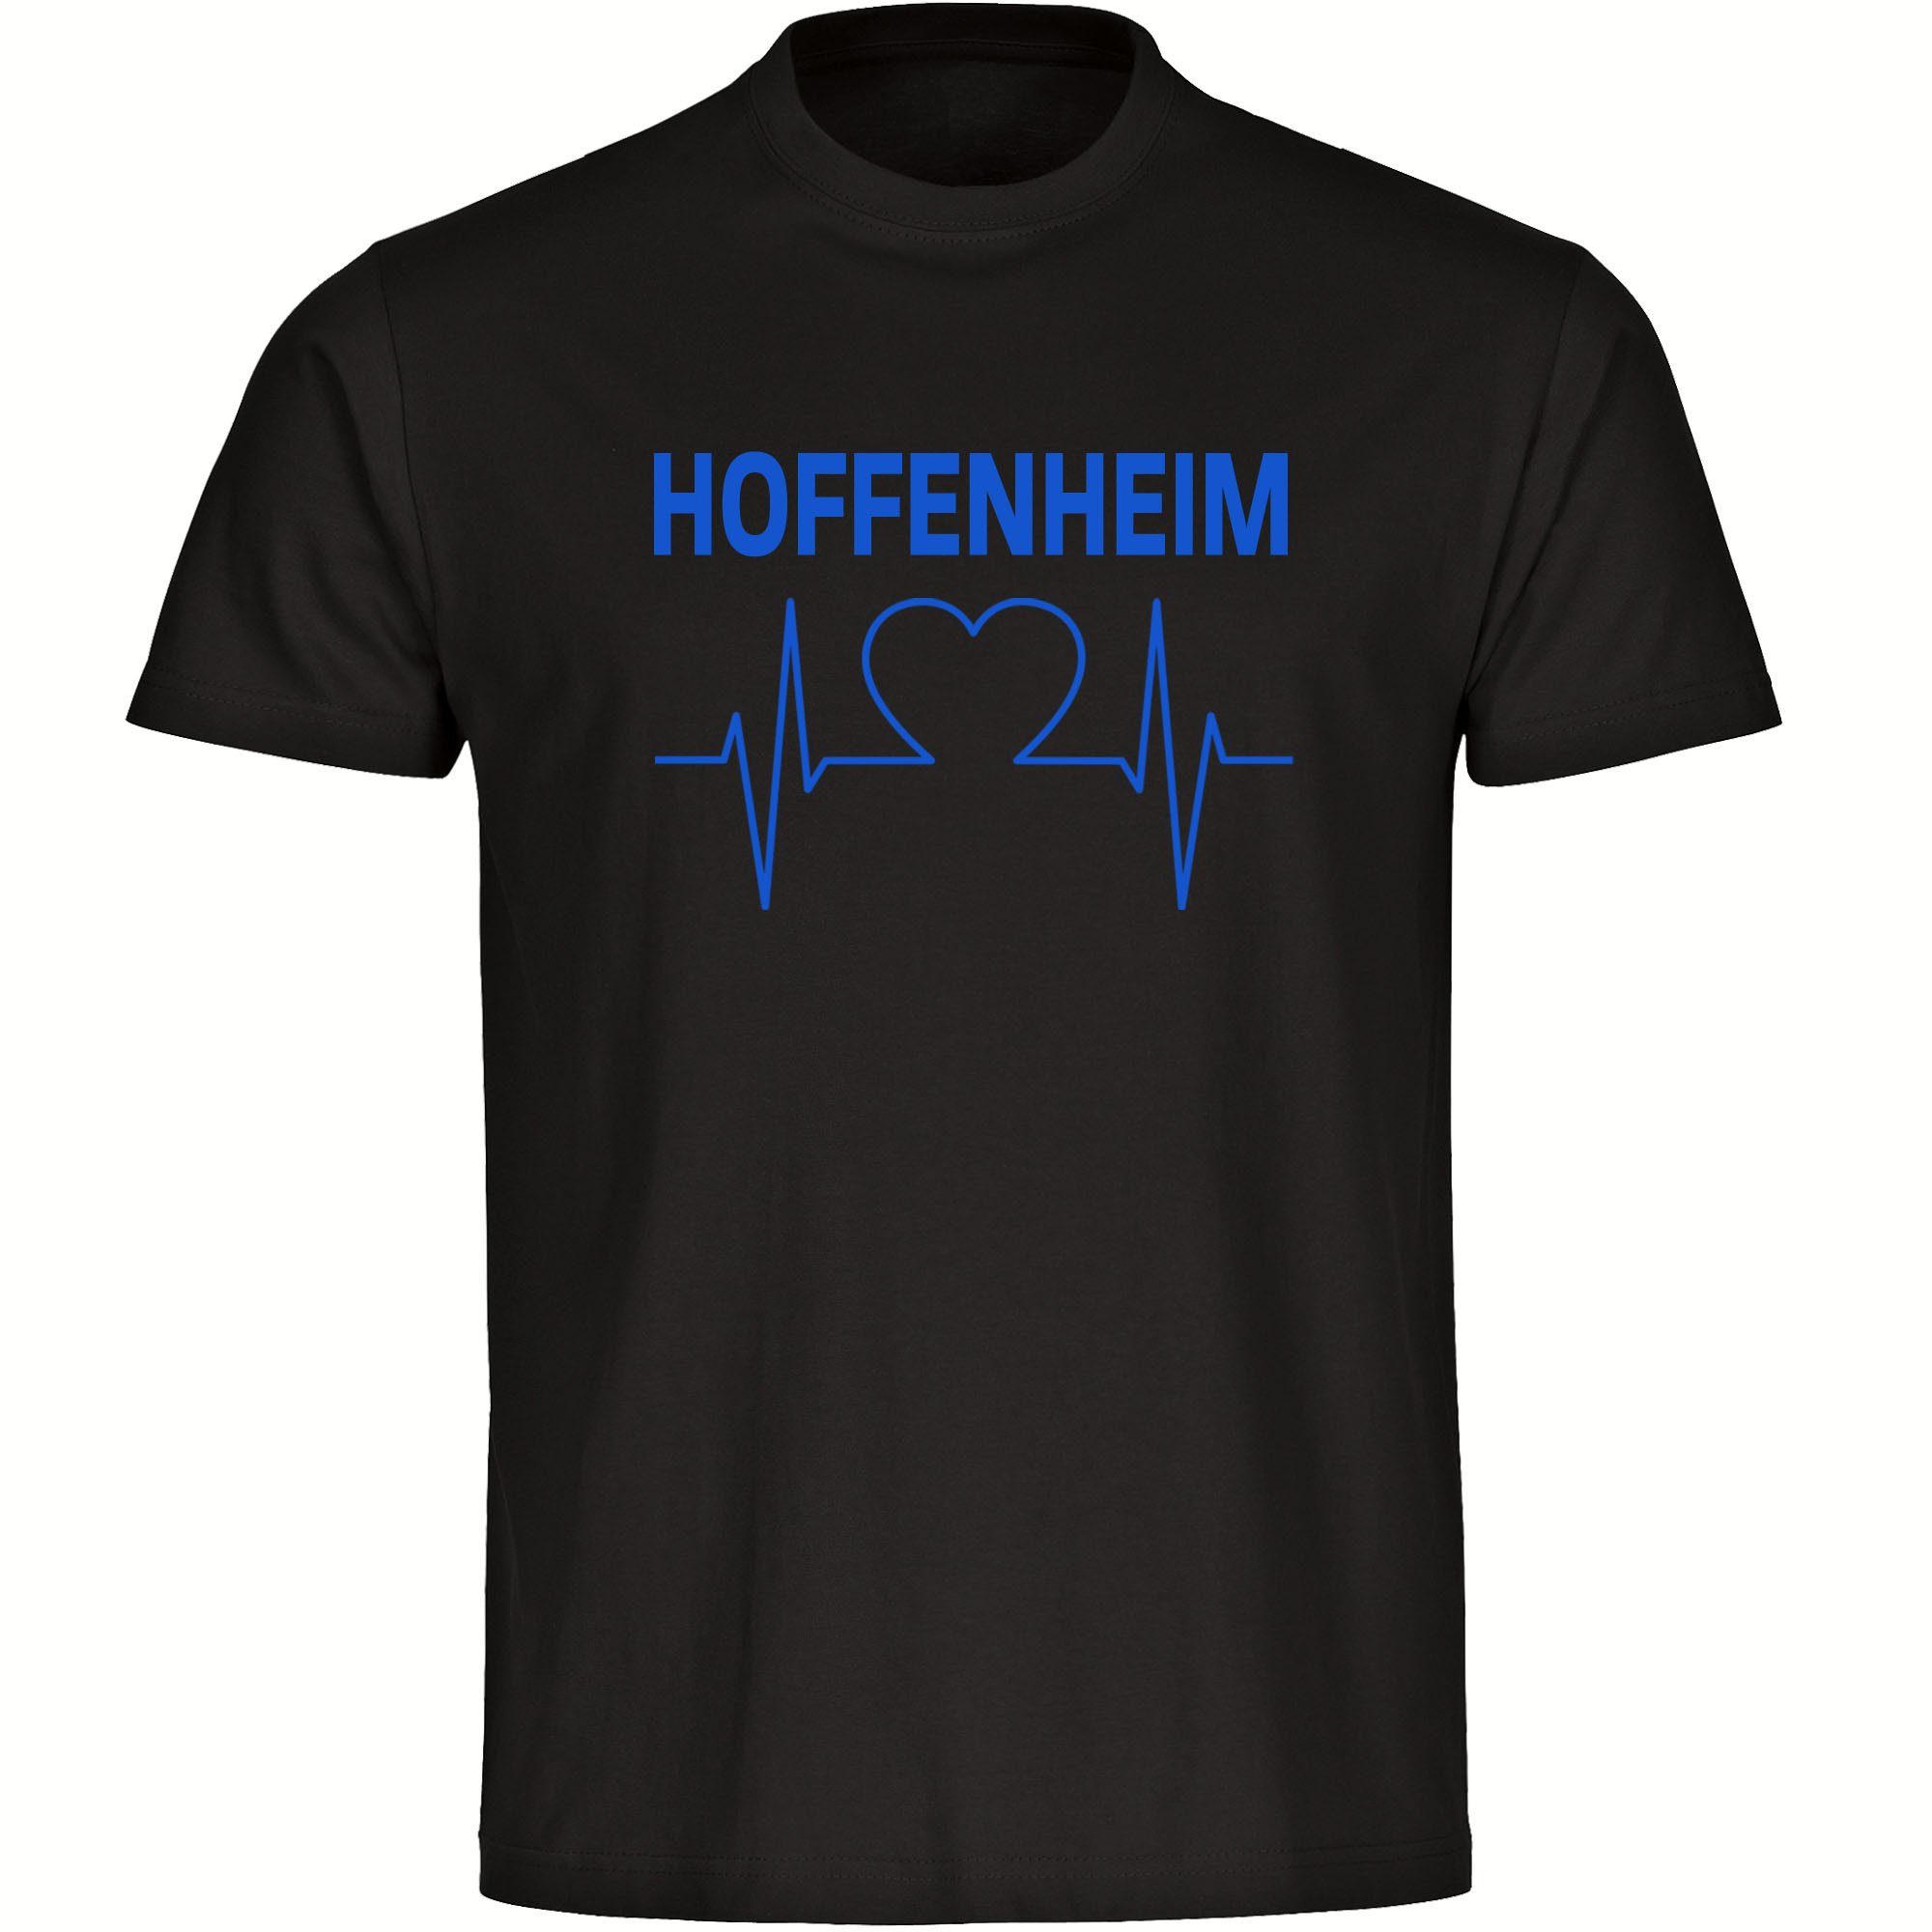 multifanshop T-Shirt Herren Hoffenheim - Herzschlag - Männer